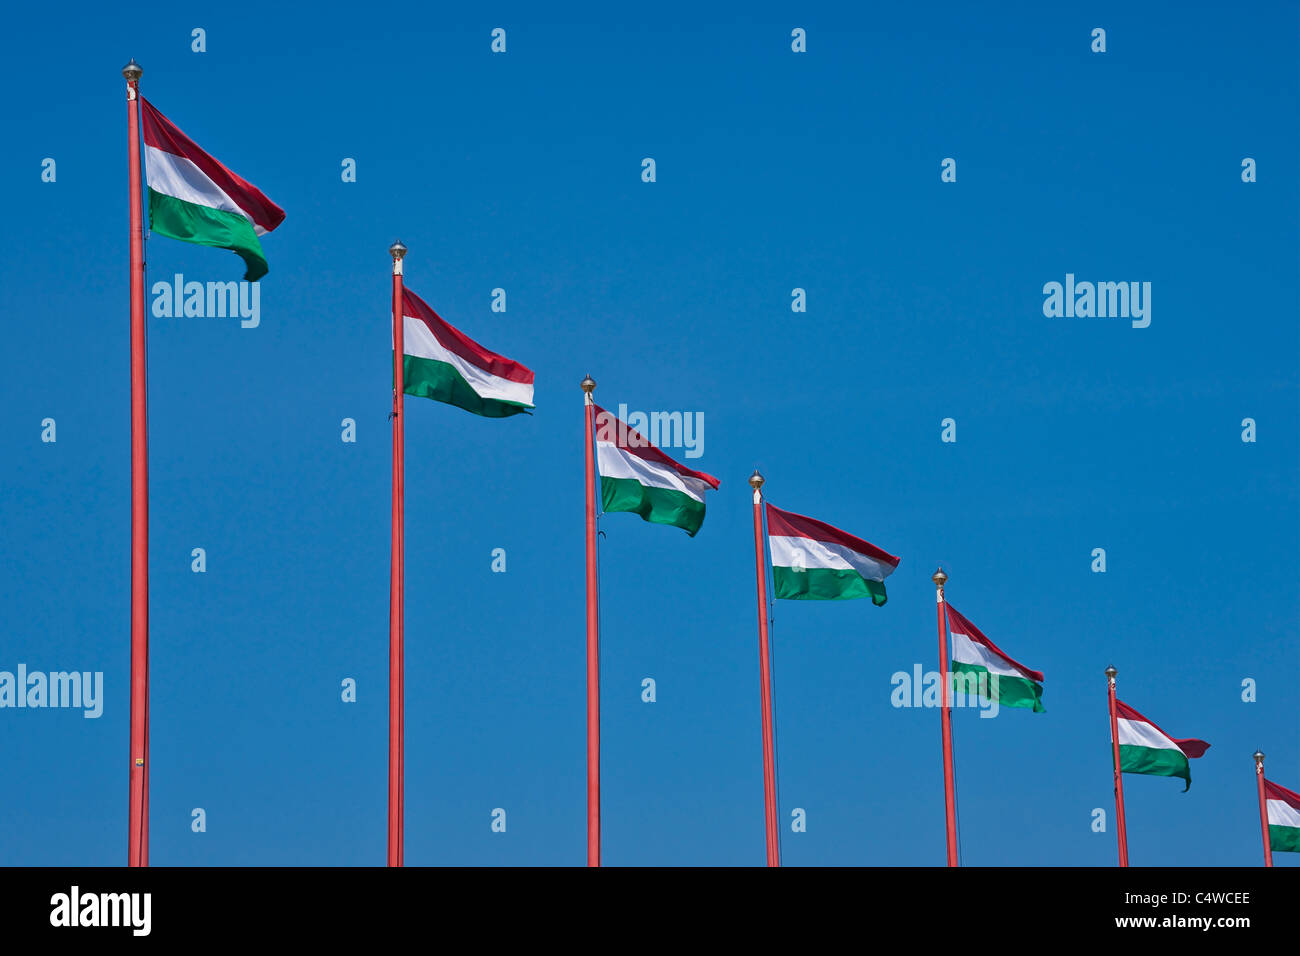 Viele Flaggen der Republik Ungarischen in einer Reihe | numerose bandiere provenienti dalla Repubblica di Ungheria in una linea Foto Stock